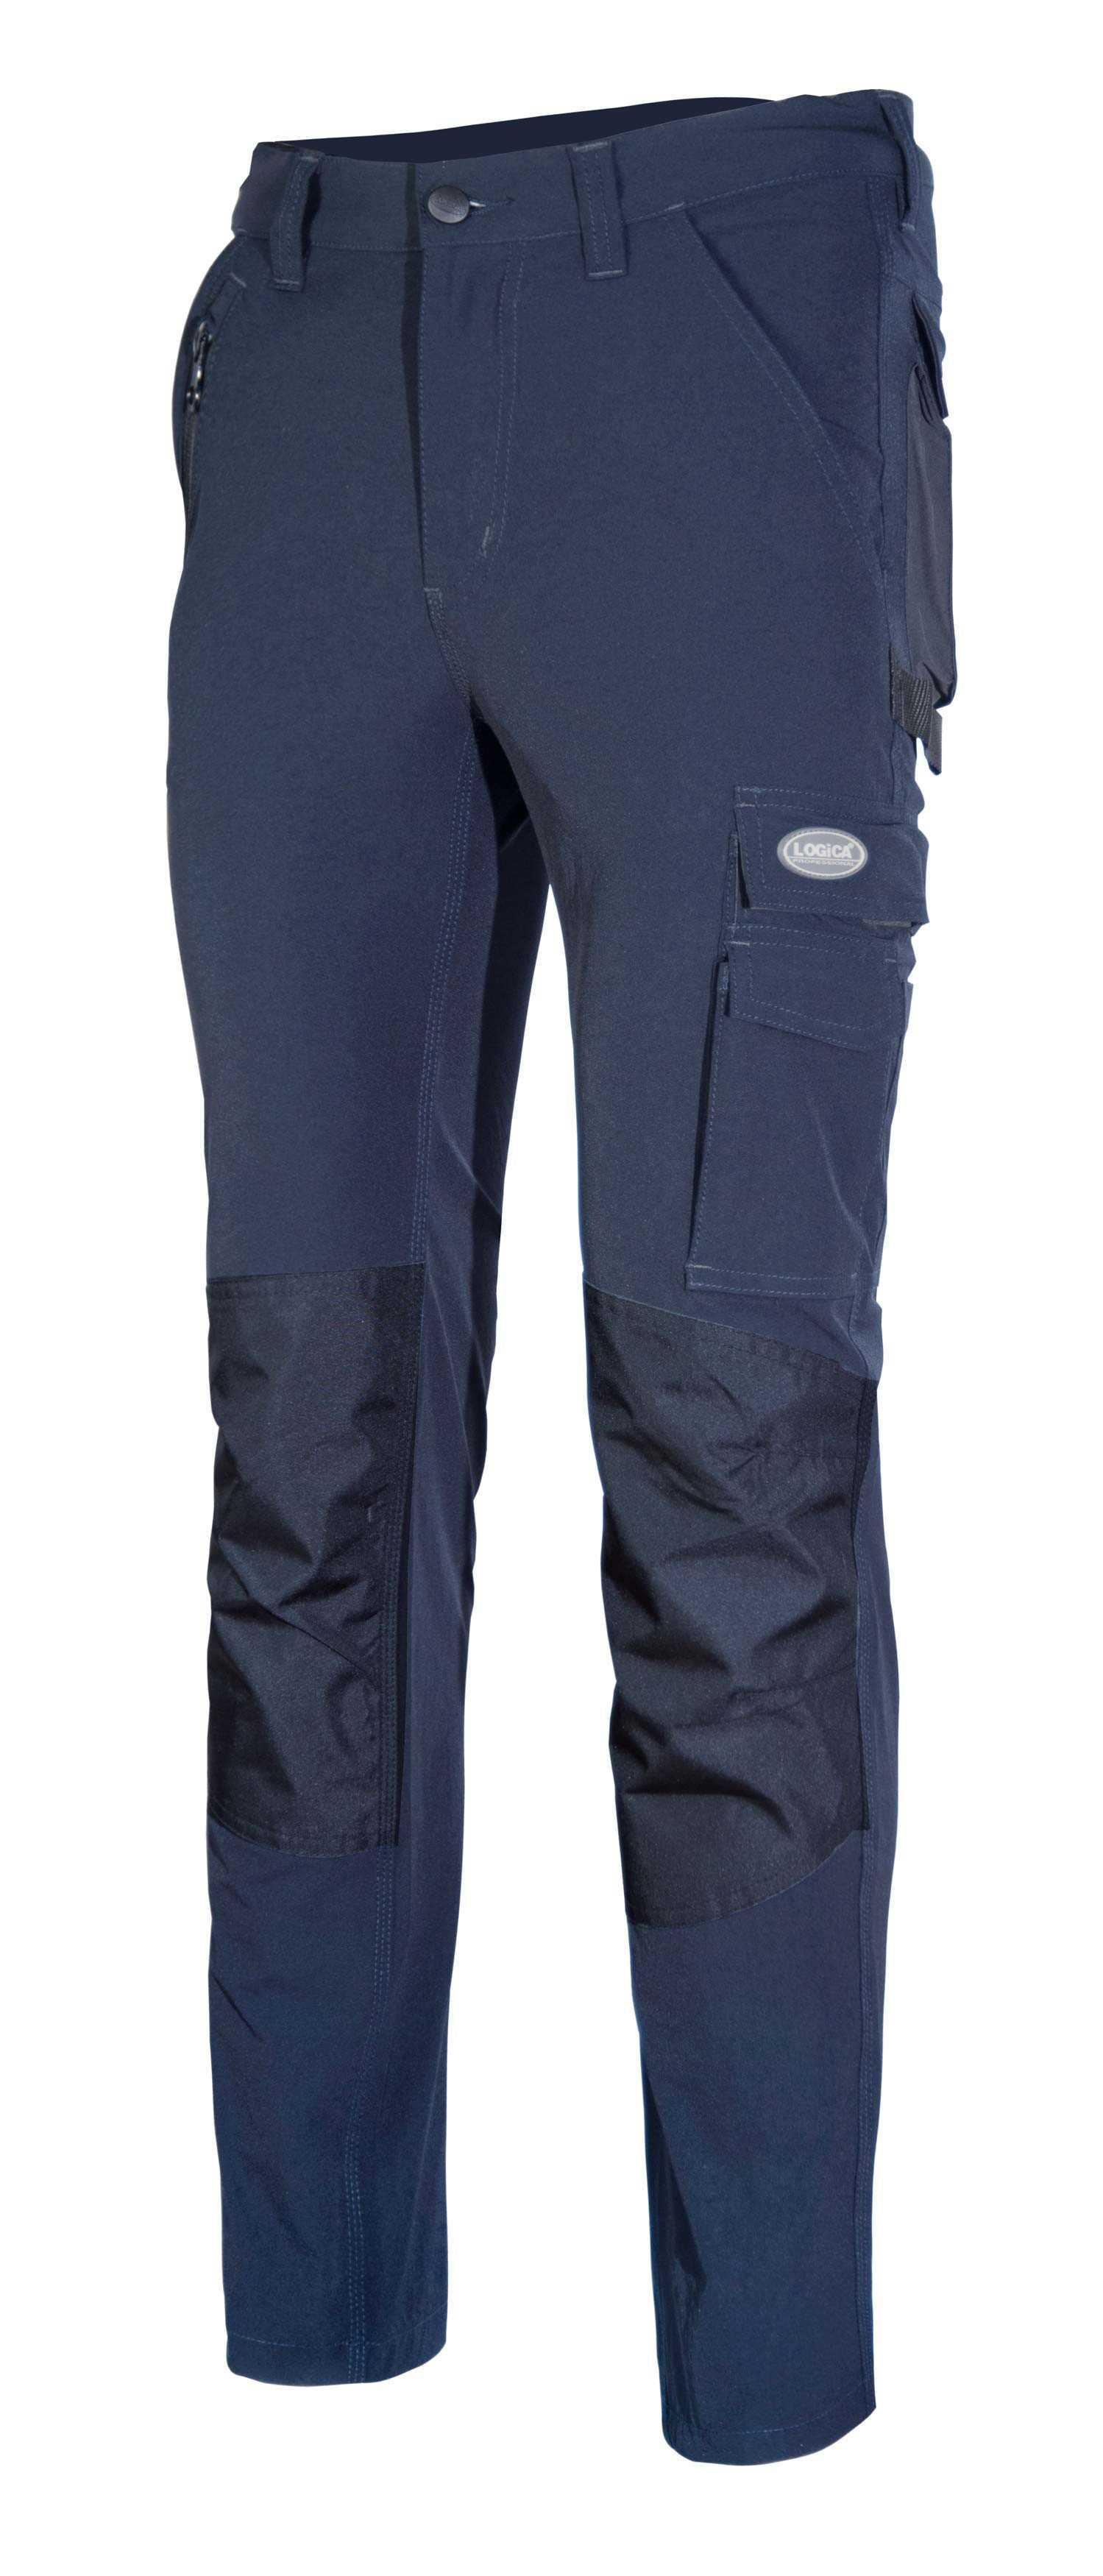 Pantalone invernale da lavoro blu taglia 2XL Logica CICLONE1-2X